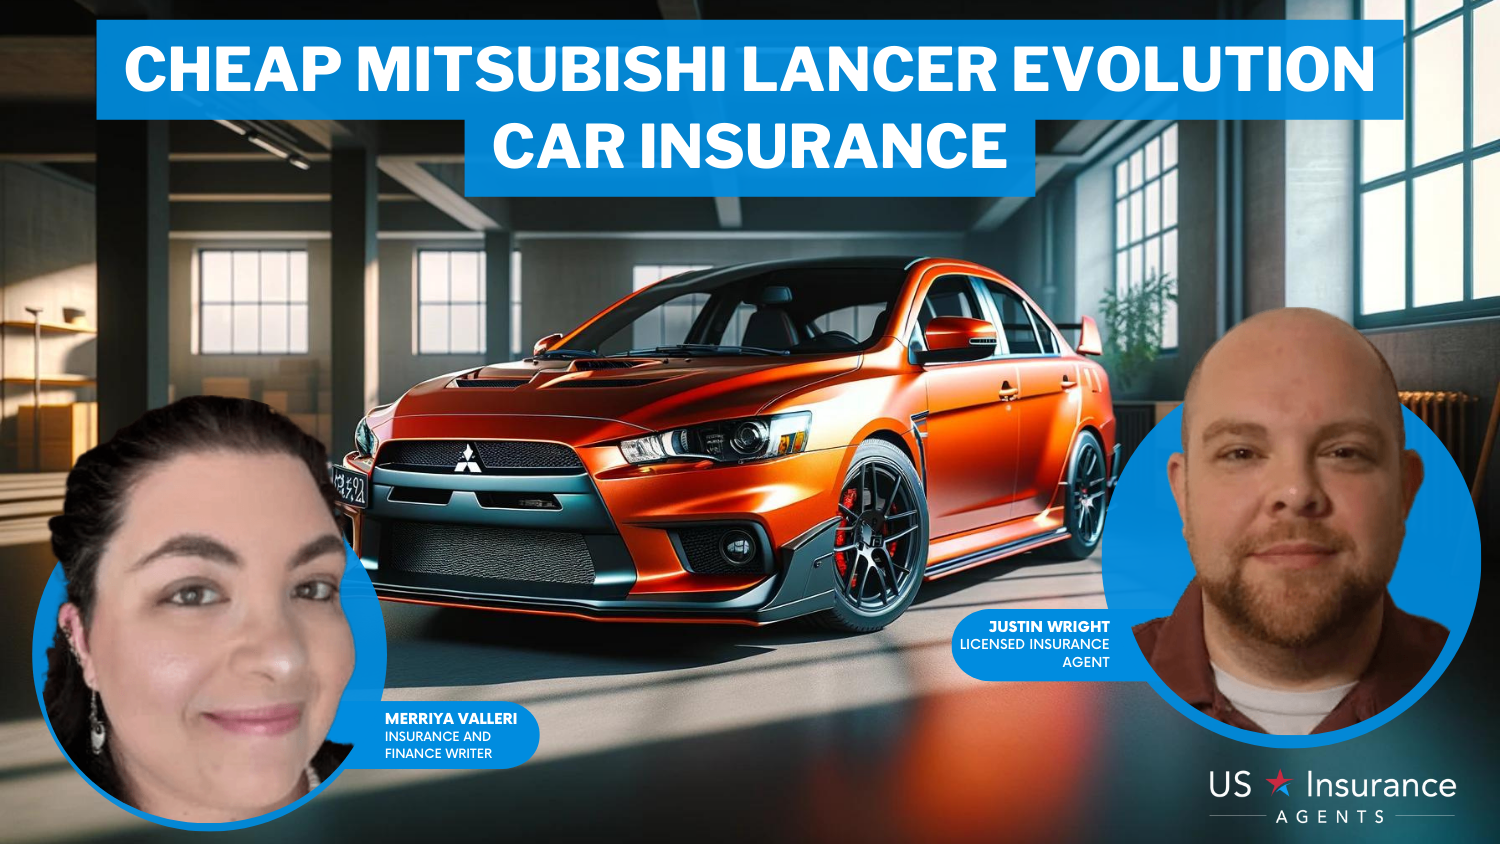 Cheap Mitsubishi Lancer Evolution Car Insurance: Progressive, Auto-Owners, and State Farm